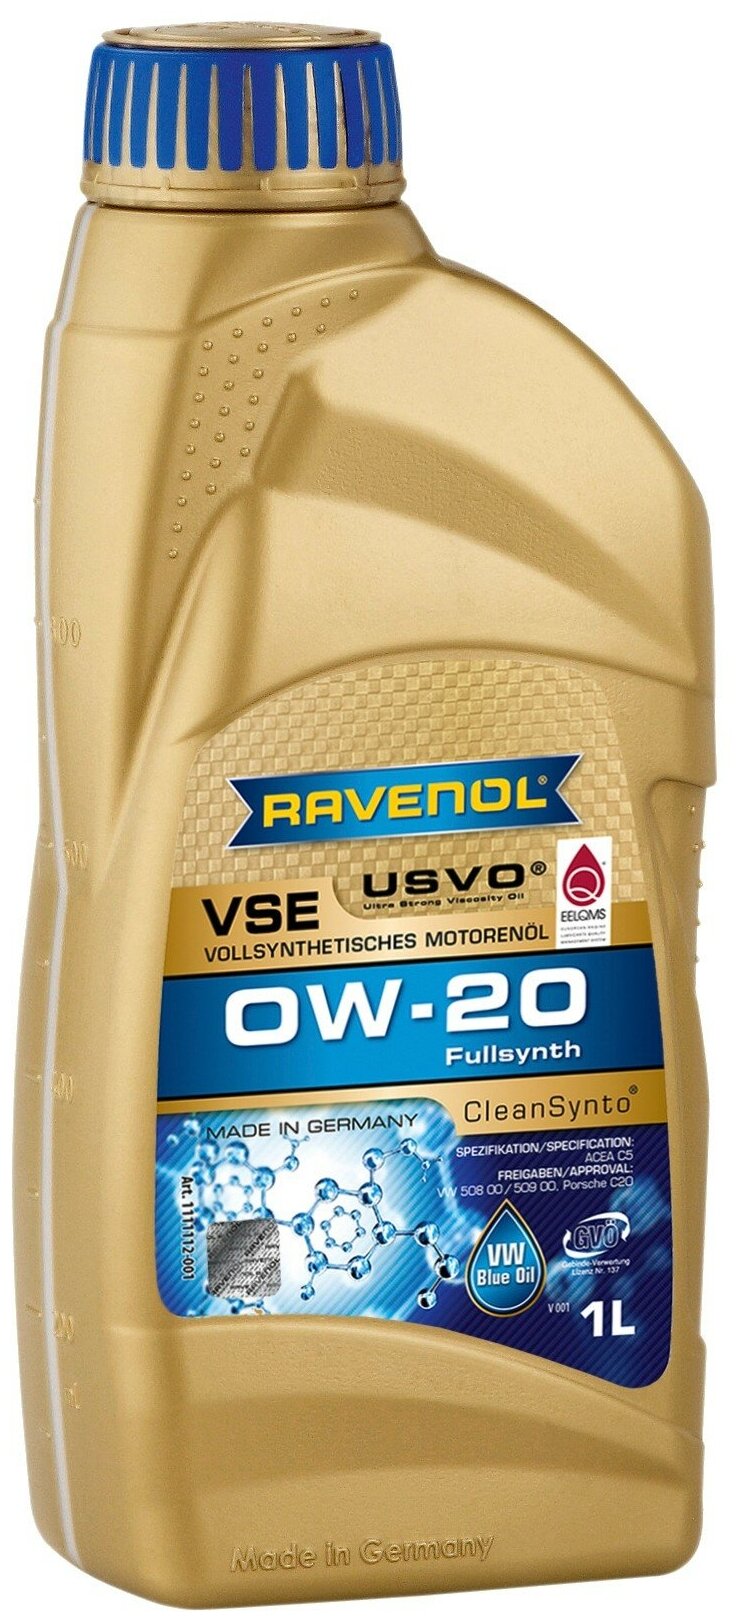 Ravenol моторное масло ravenol vse sae 0w-20, 1л 4014835862036